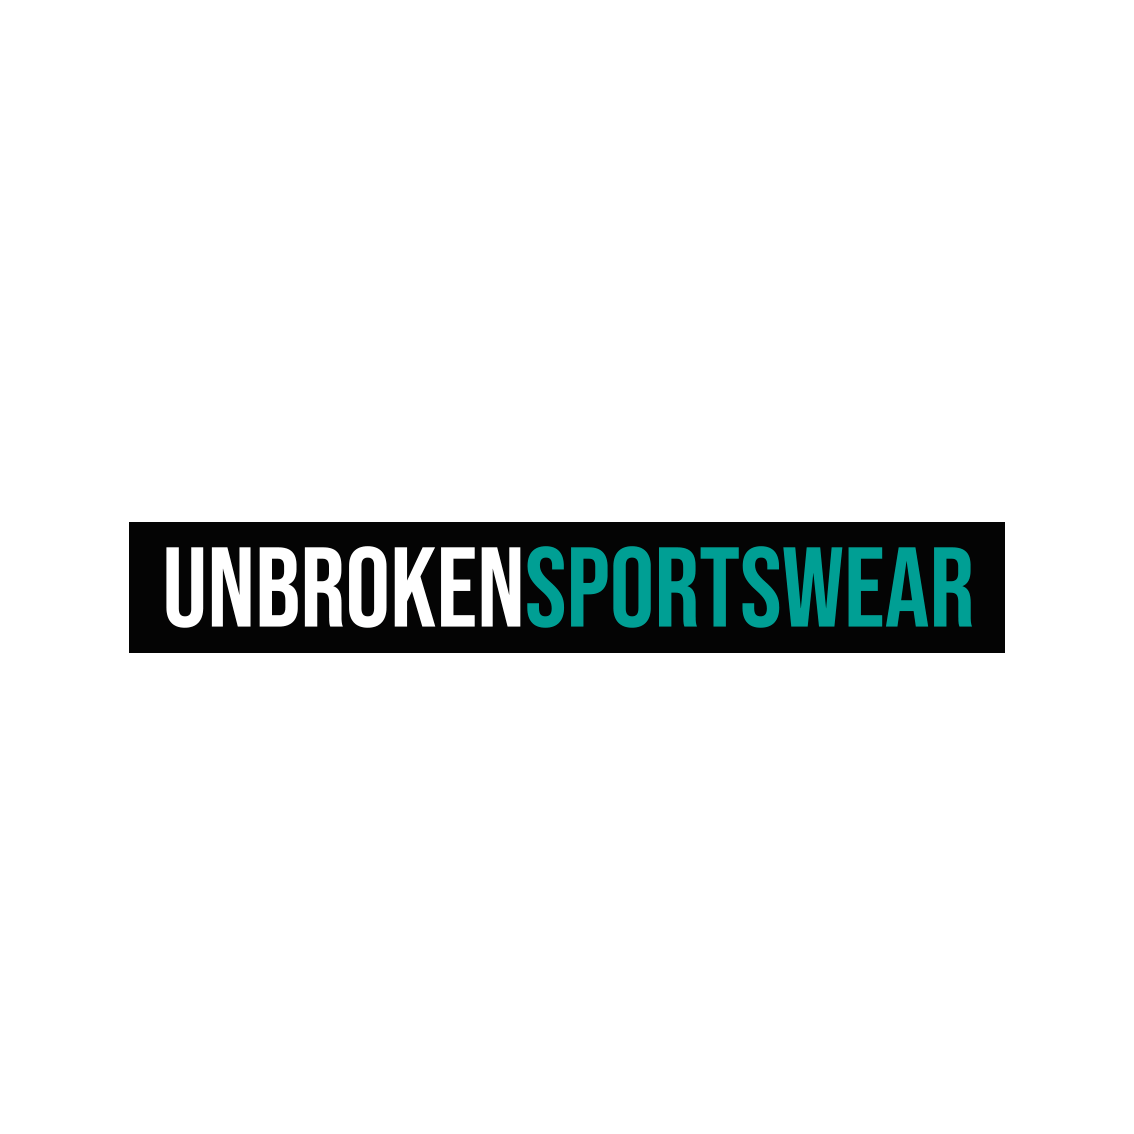 Sticker Unbroken Sports coleccionable - Unbroken Sports Wear 